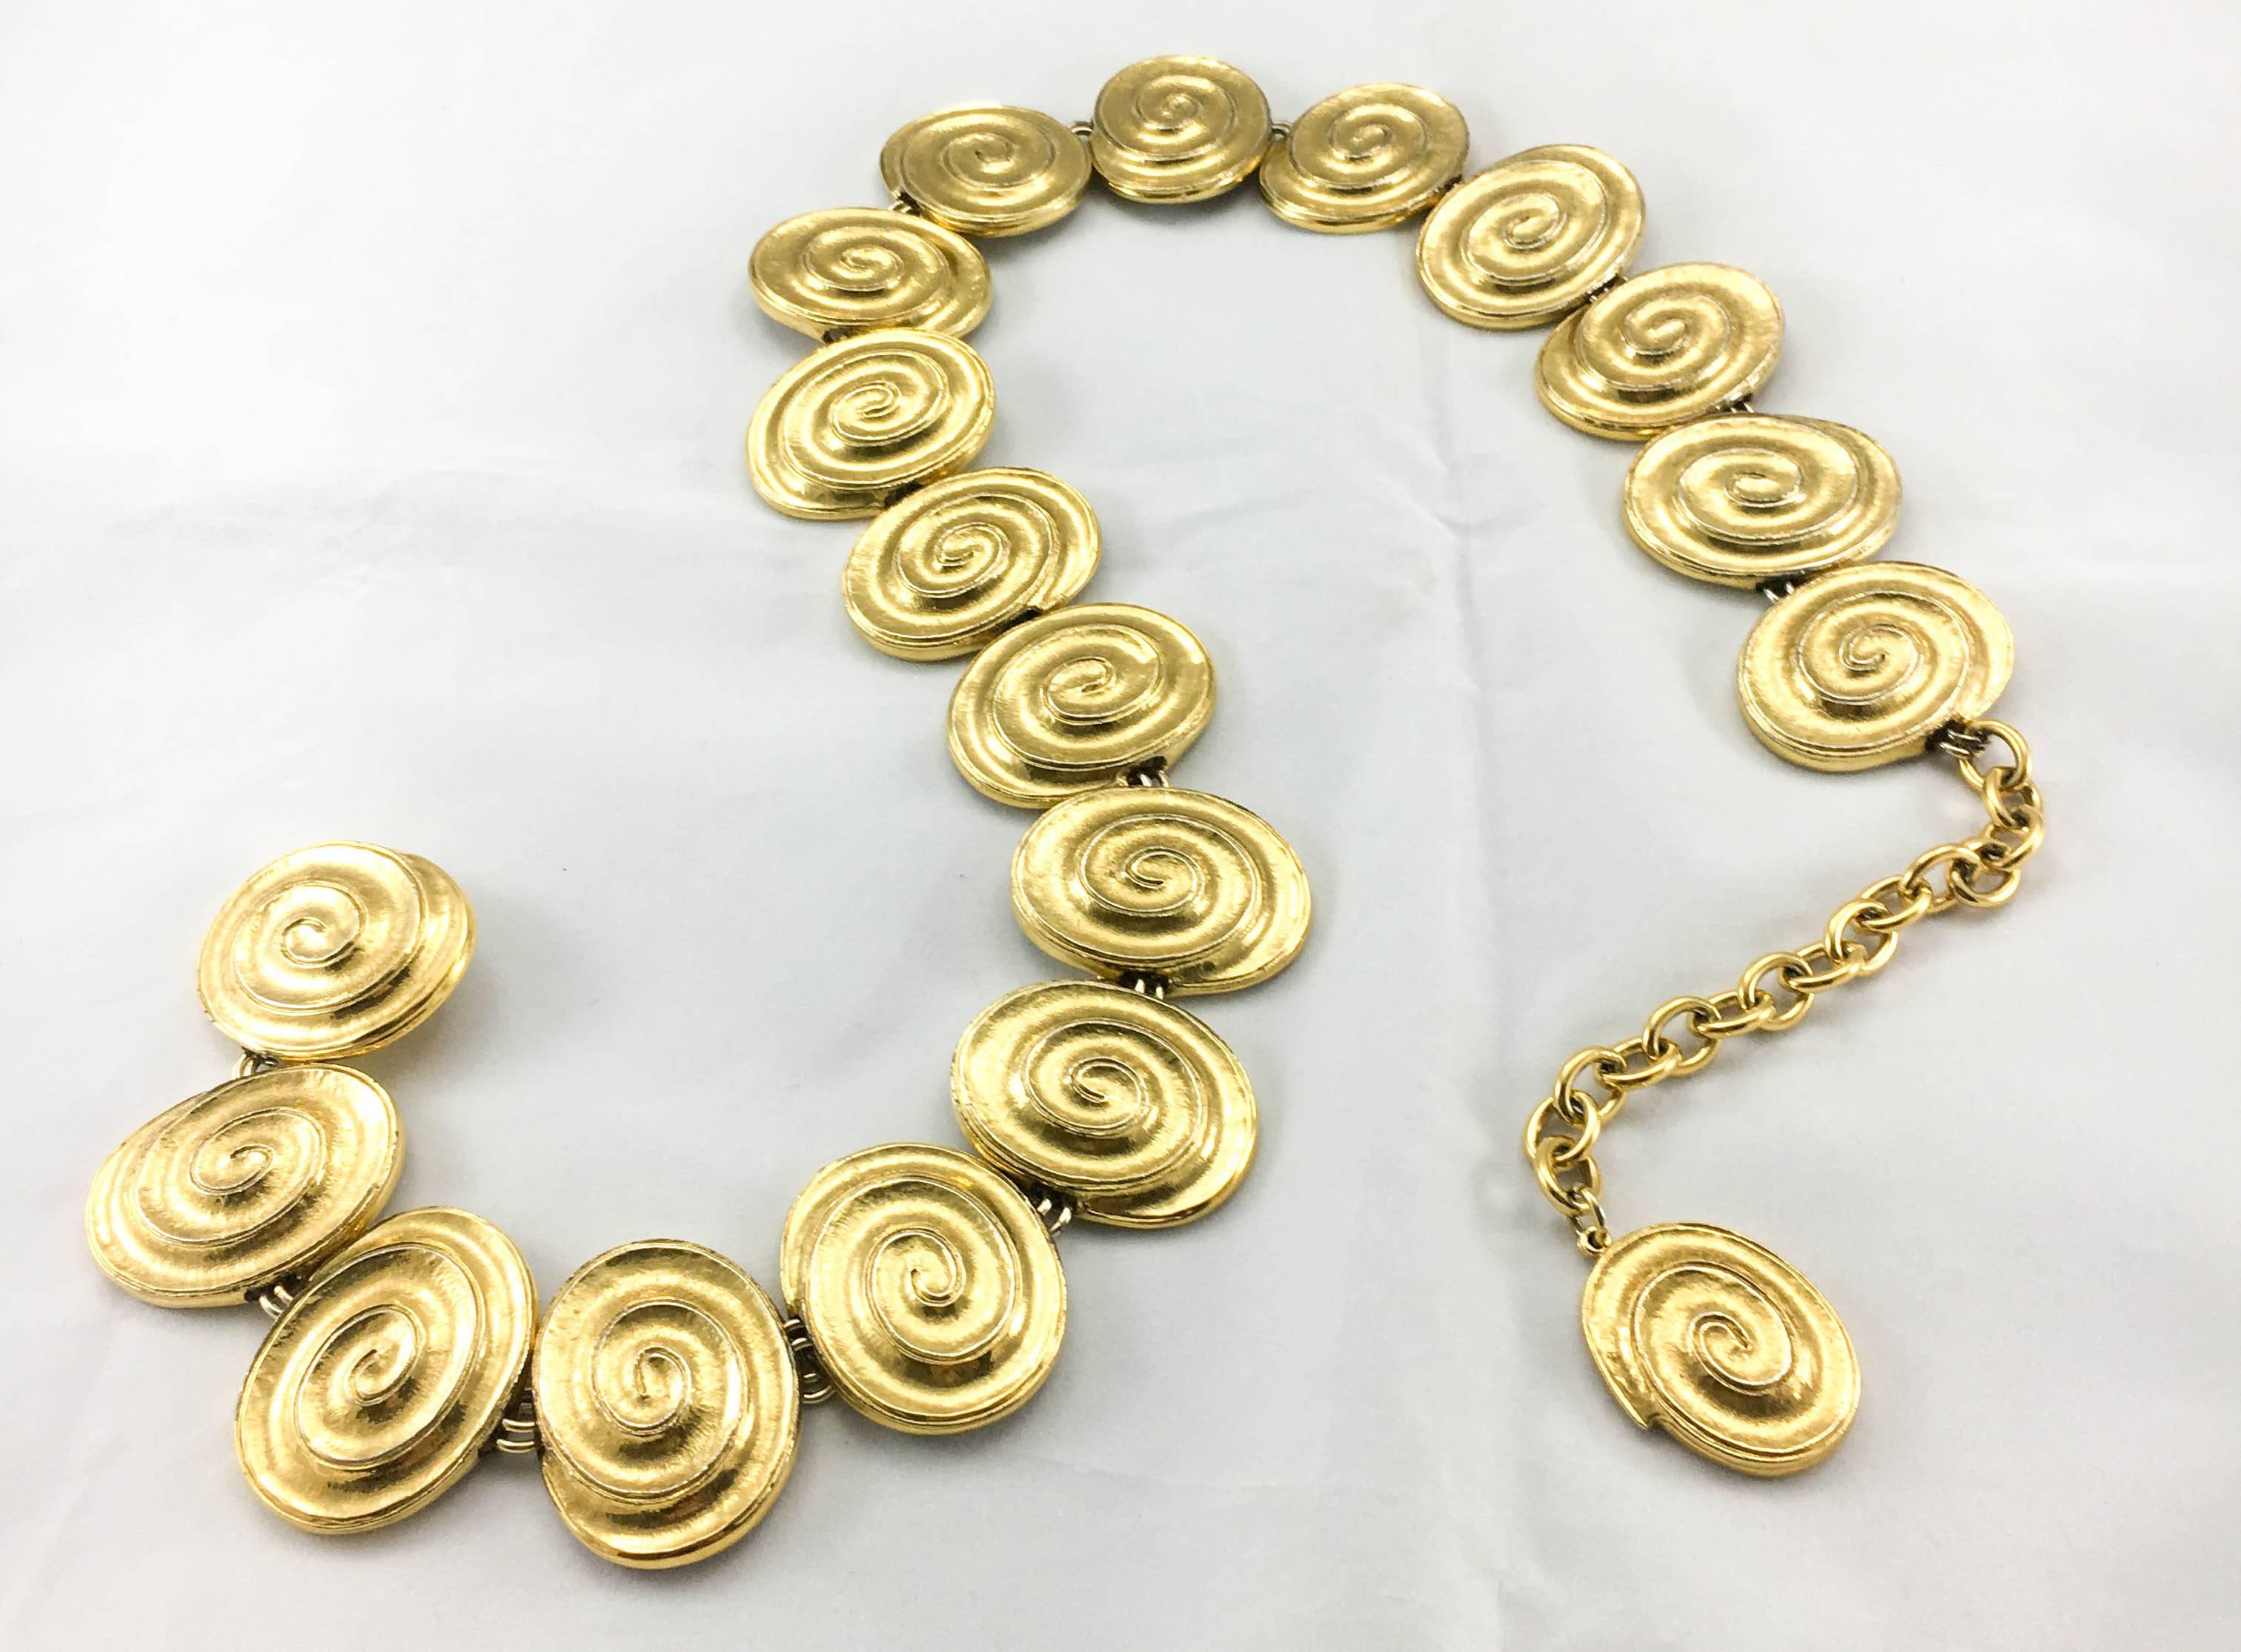 Yves Saint Laurent Gold-Plated 'Spiral' Belt / Necklace - 1980's 2